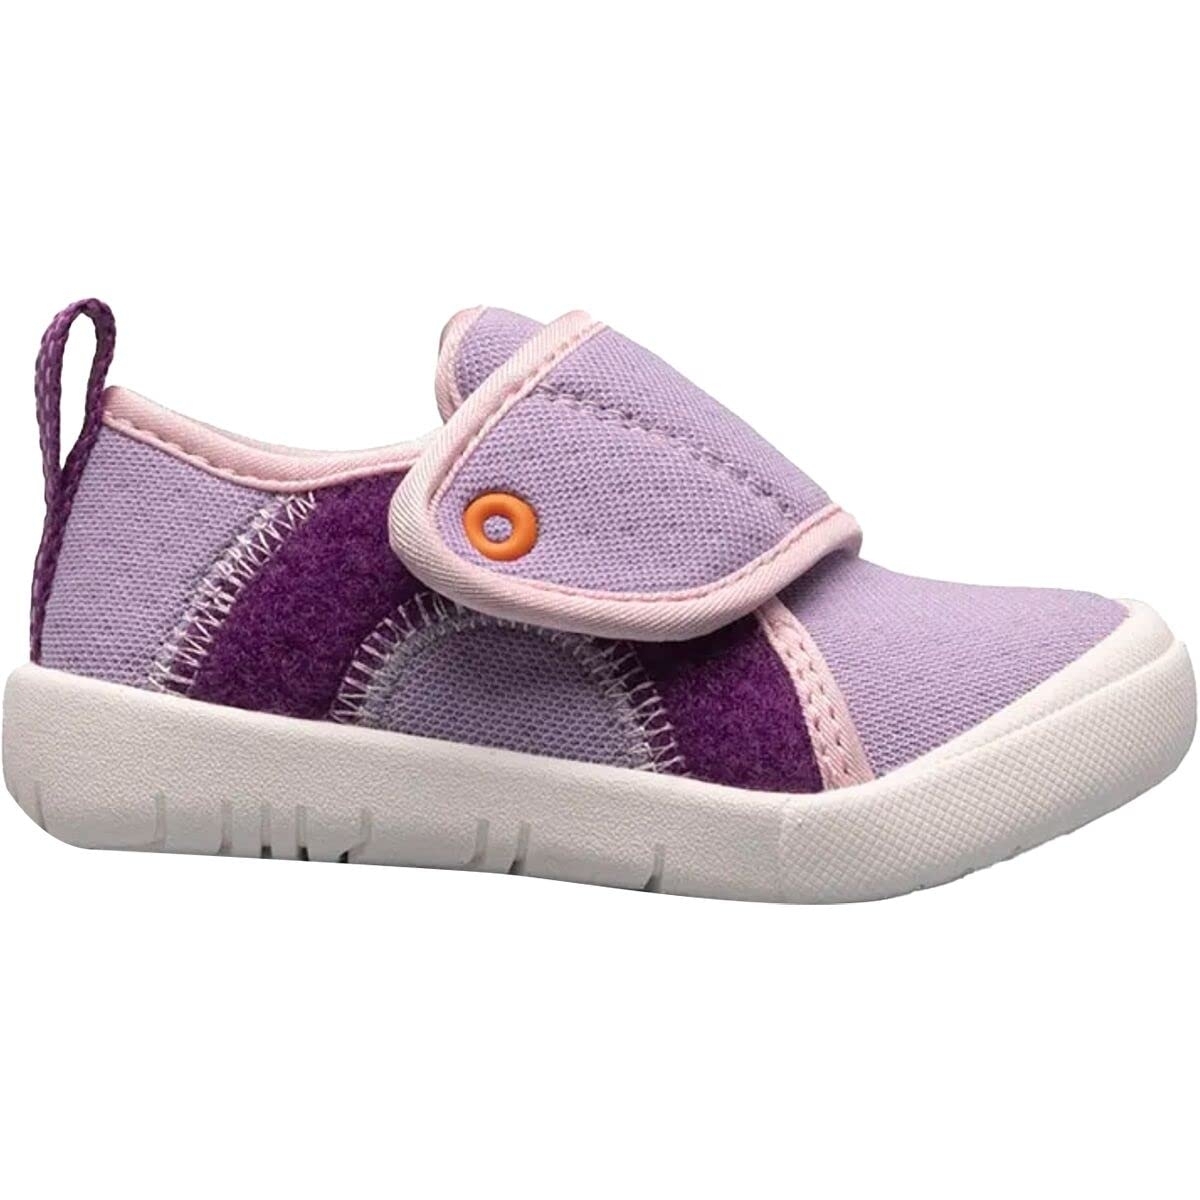 BOGS Unisex Baby Kicker Hook And Loop Shoe Sneaker Lavender Multi - 72811I-541 1 LAVENDER MULTI - LAVENDER MULTI, 9 Little KId